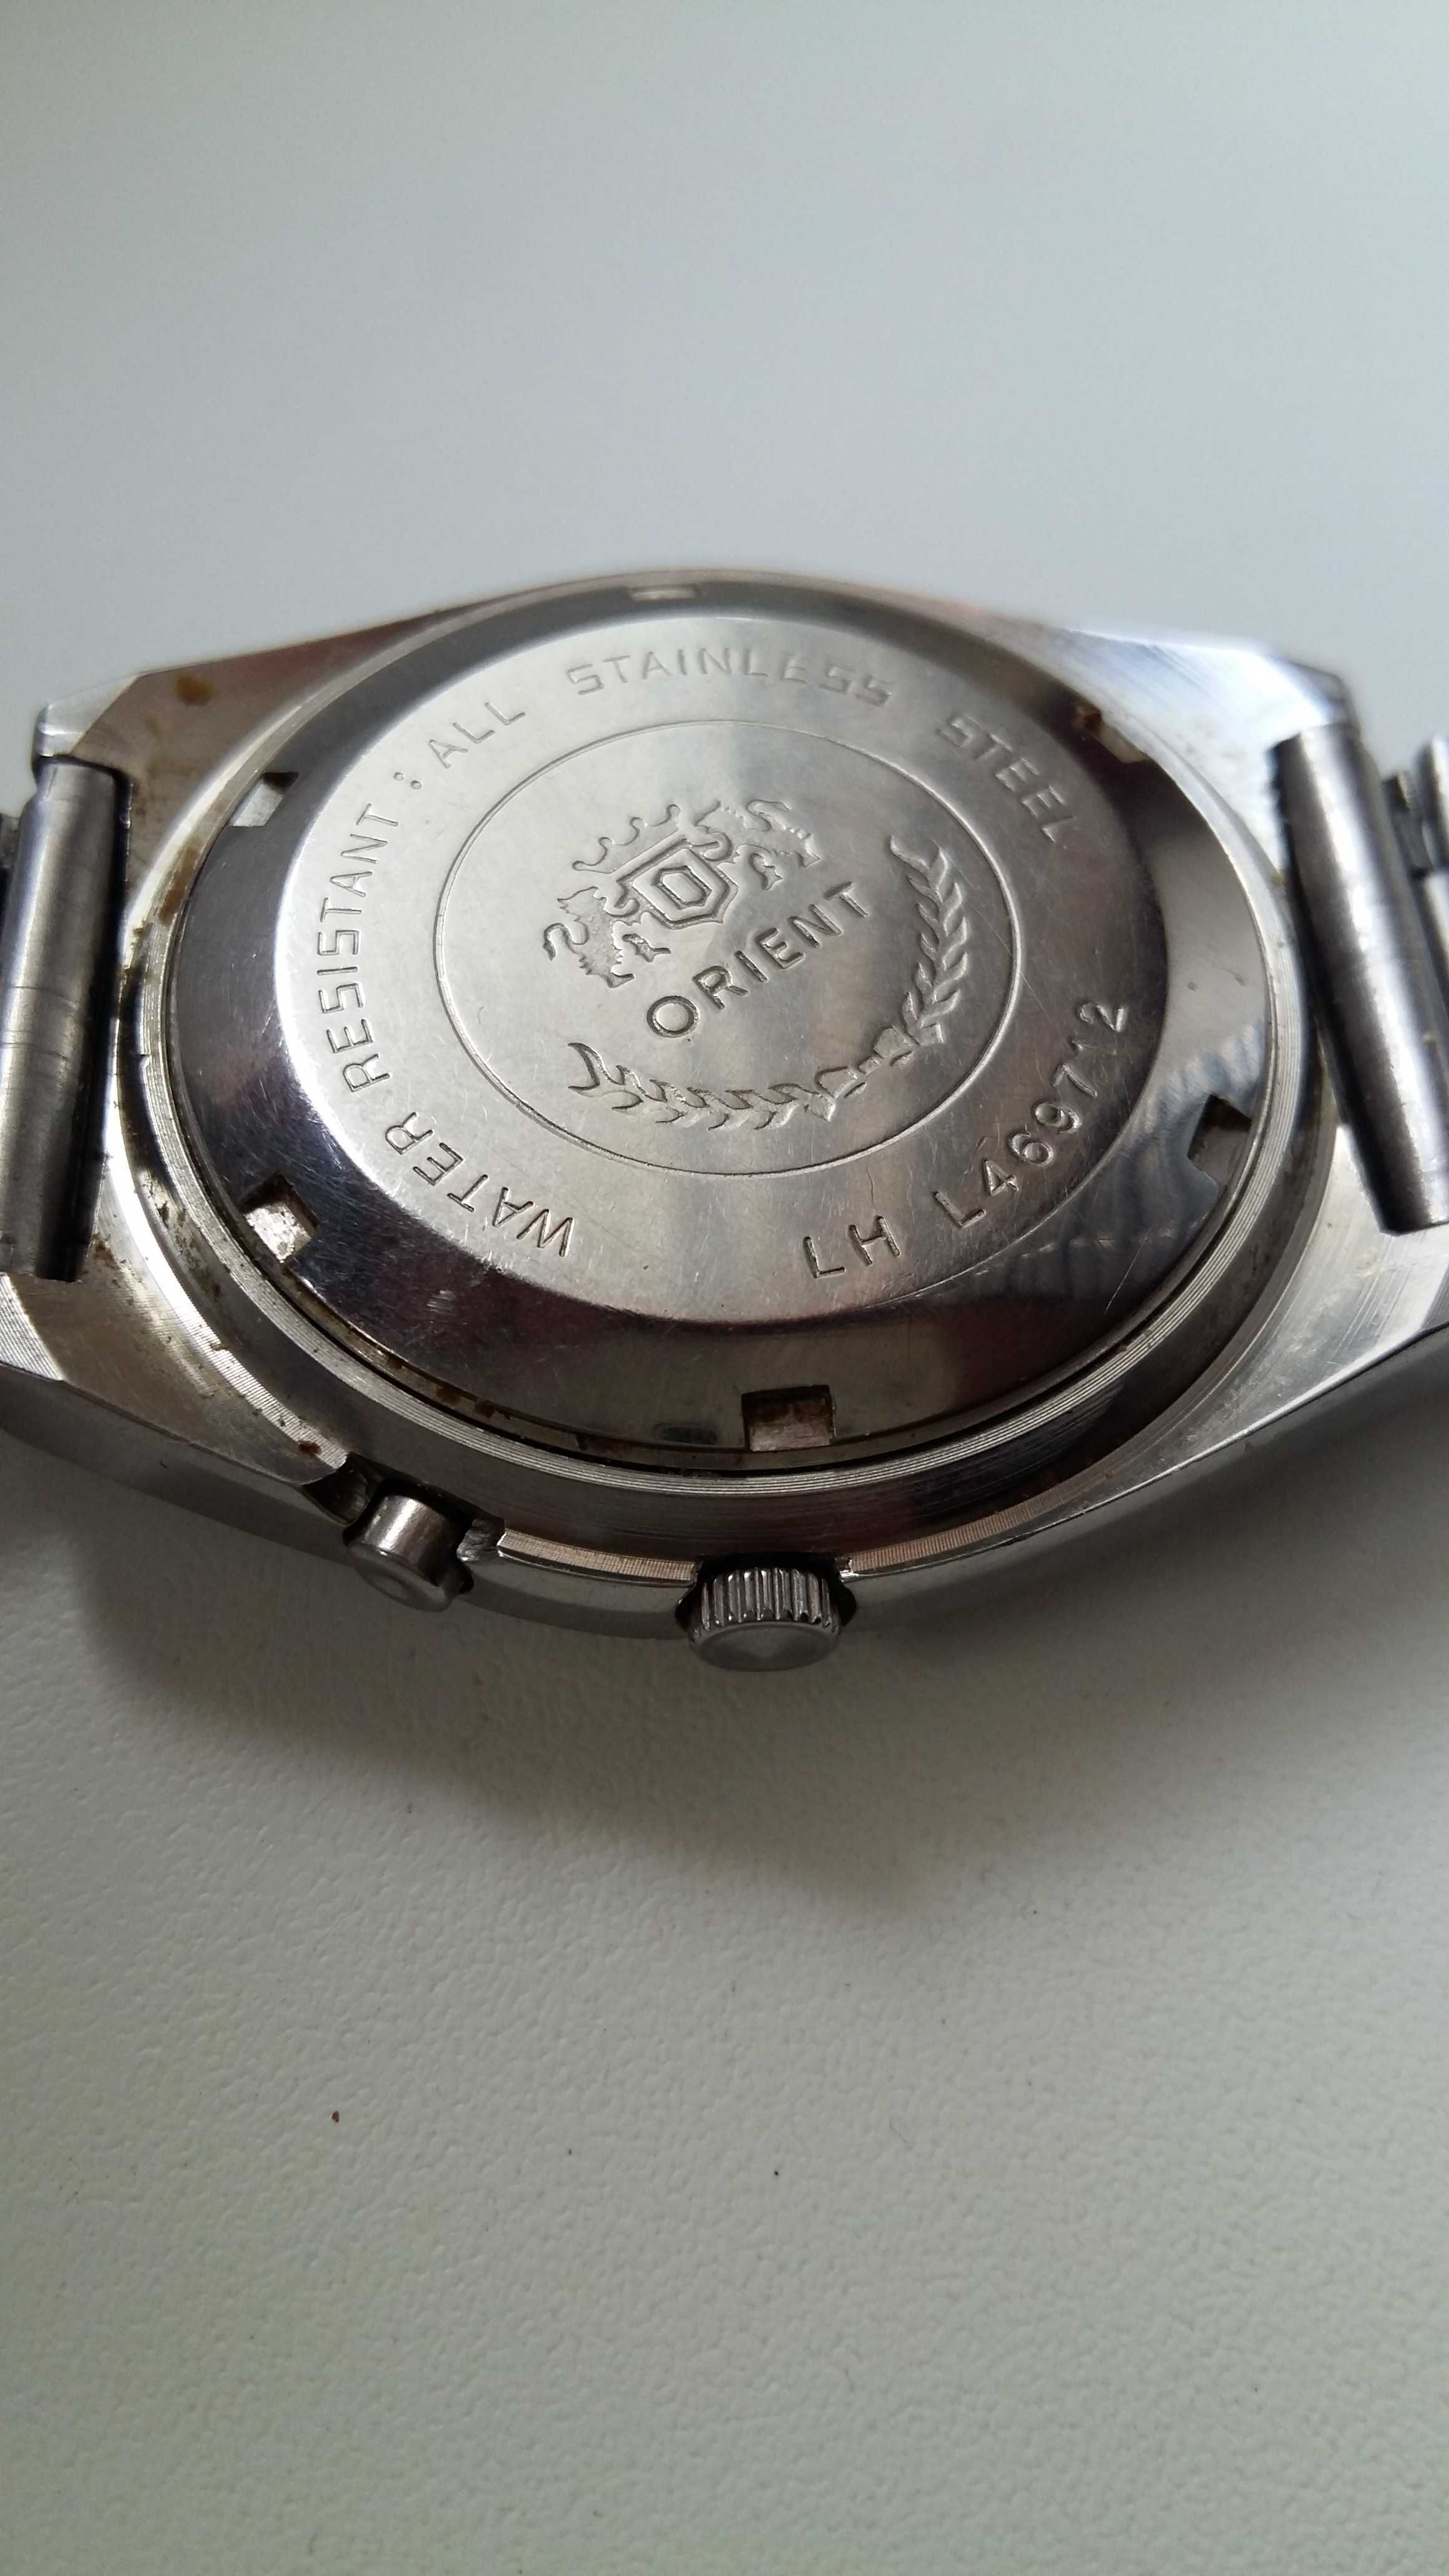 Zegarek Orient 21 jewels automatic stal nie srebro.